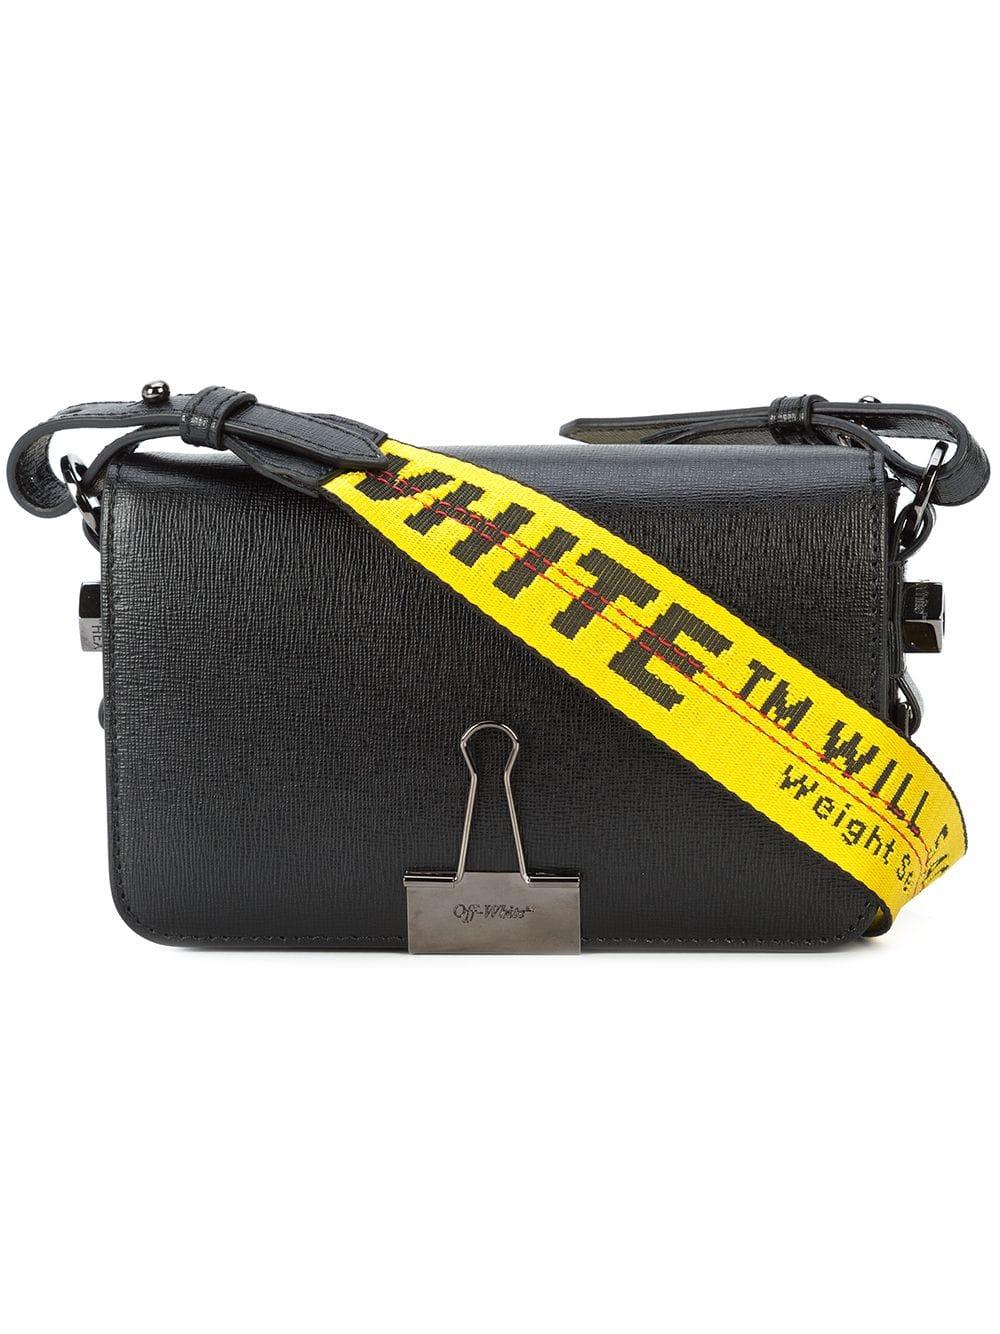 Off-White c/o Virgil Abloh Leather Binder Clip Mini Bag in Black - Lyst